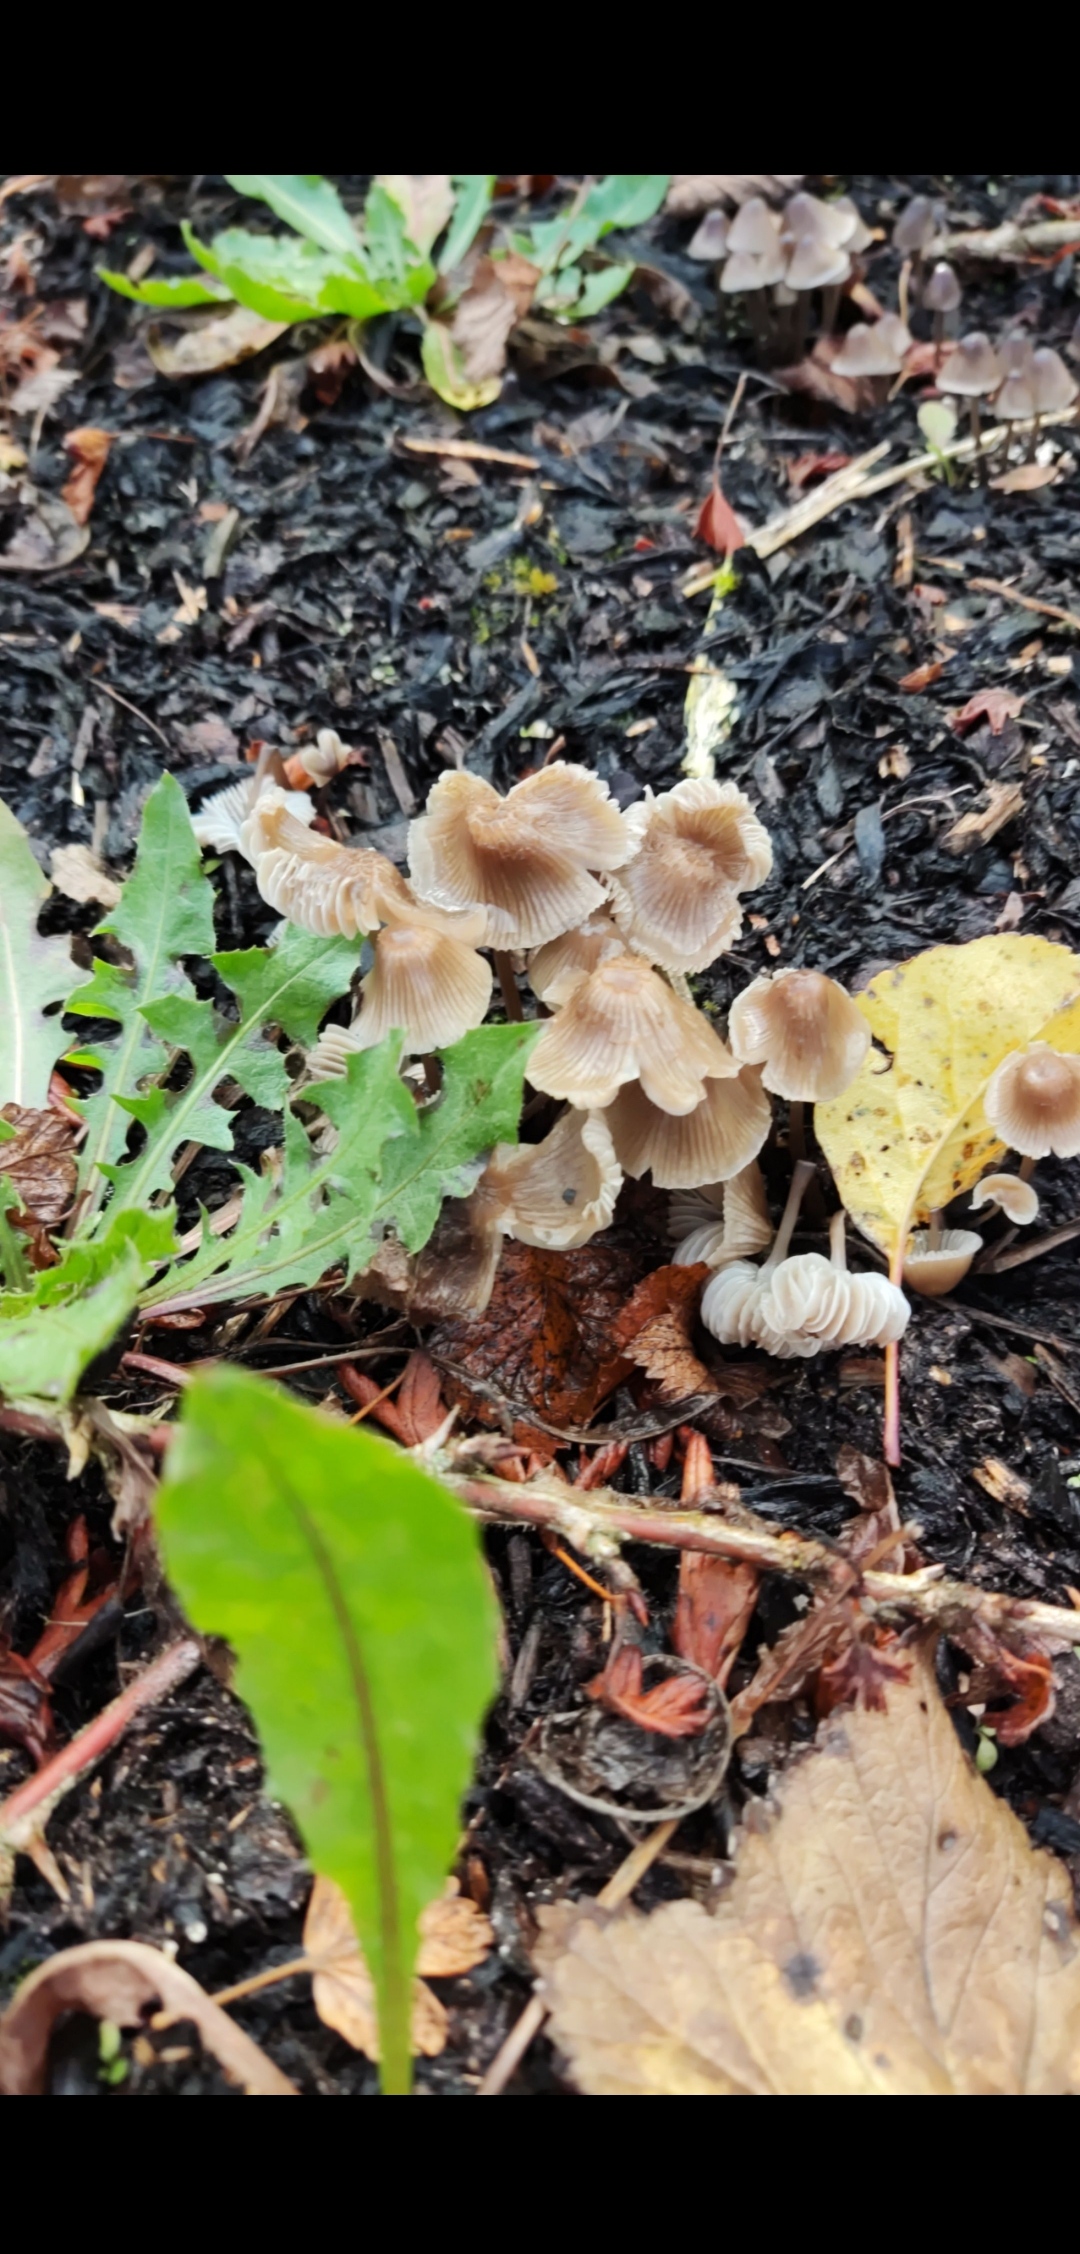 Some sort of nitrous mushroom